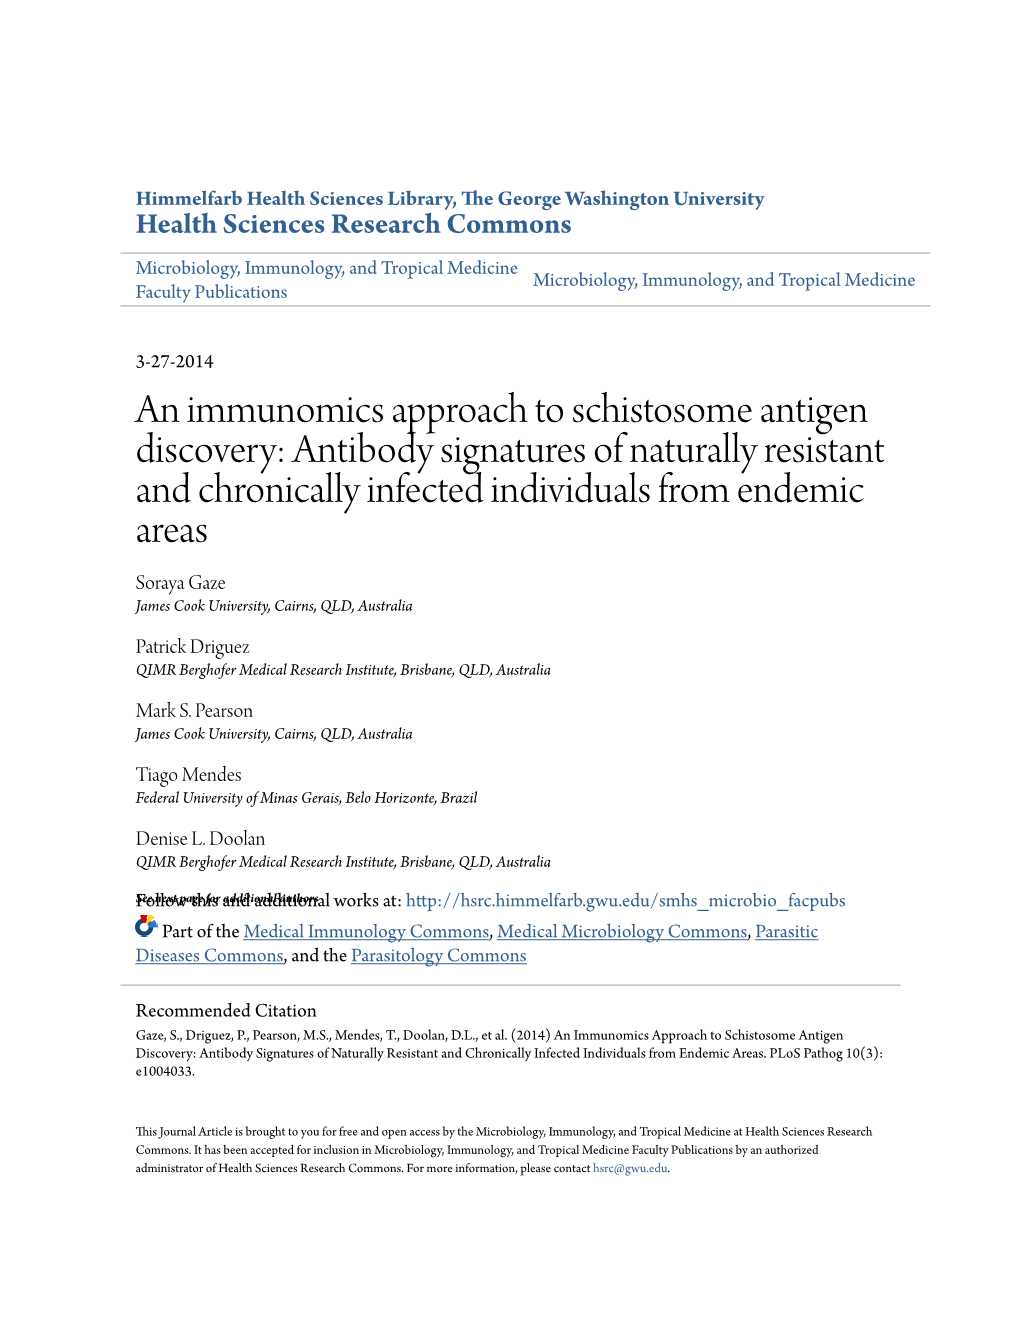 An Immunomics Approach to Schistosome Antigen Discovery